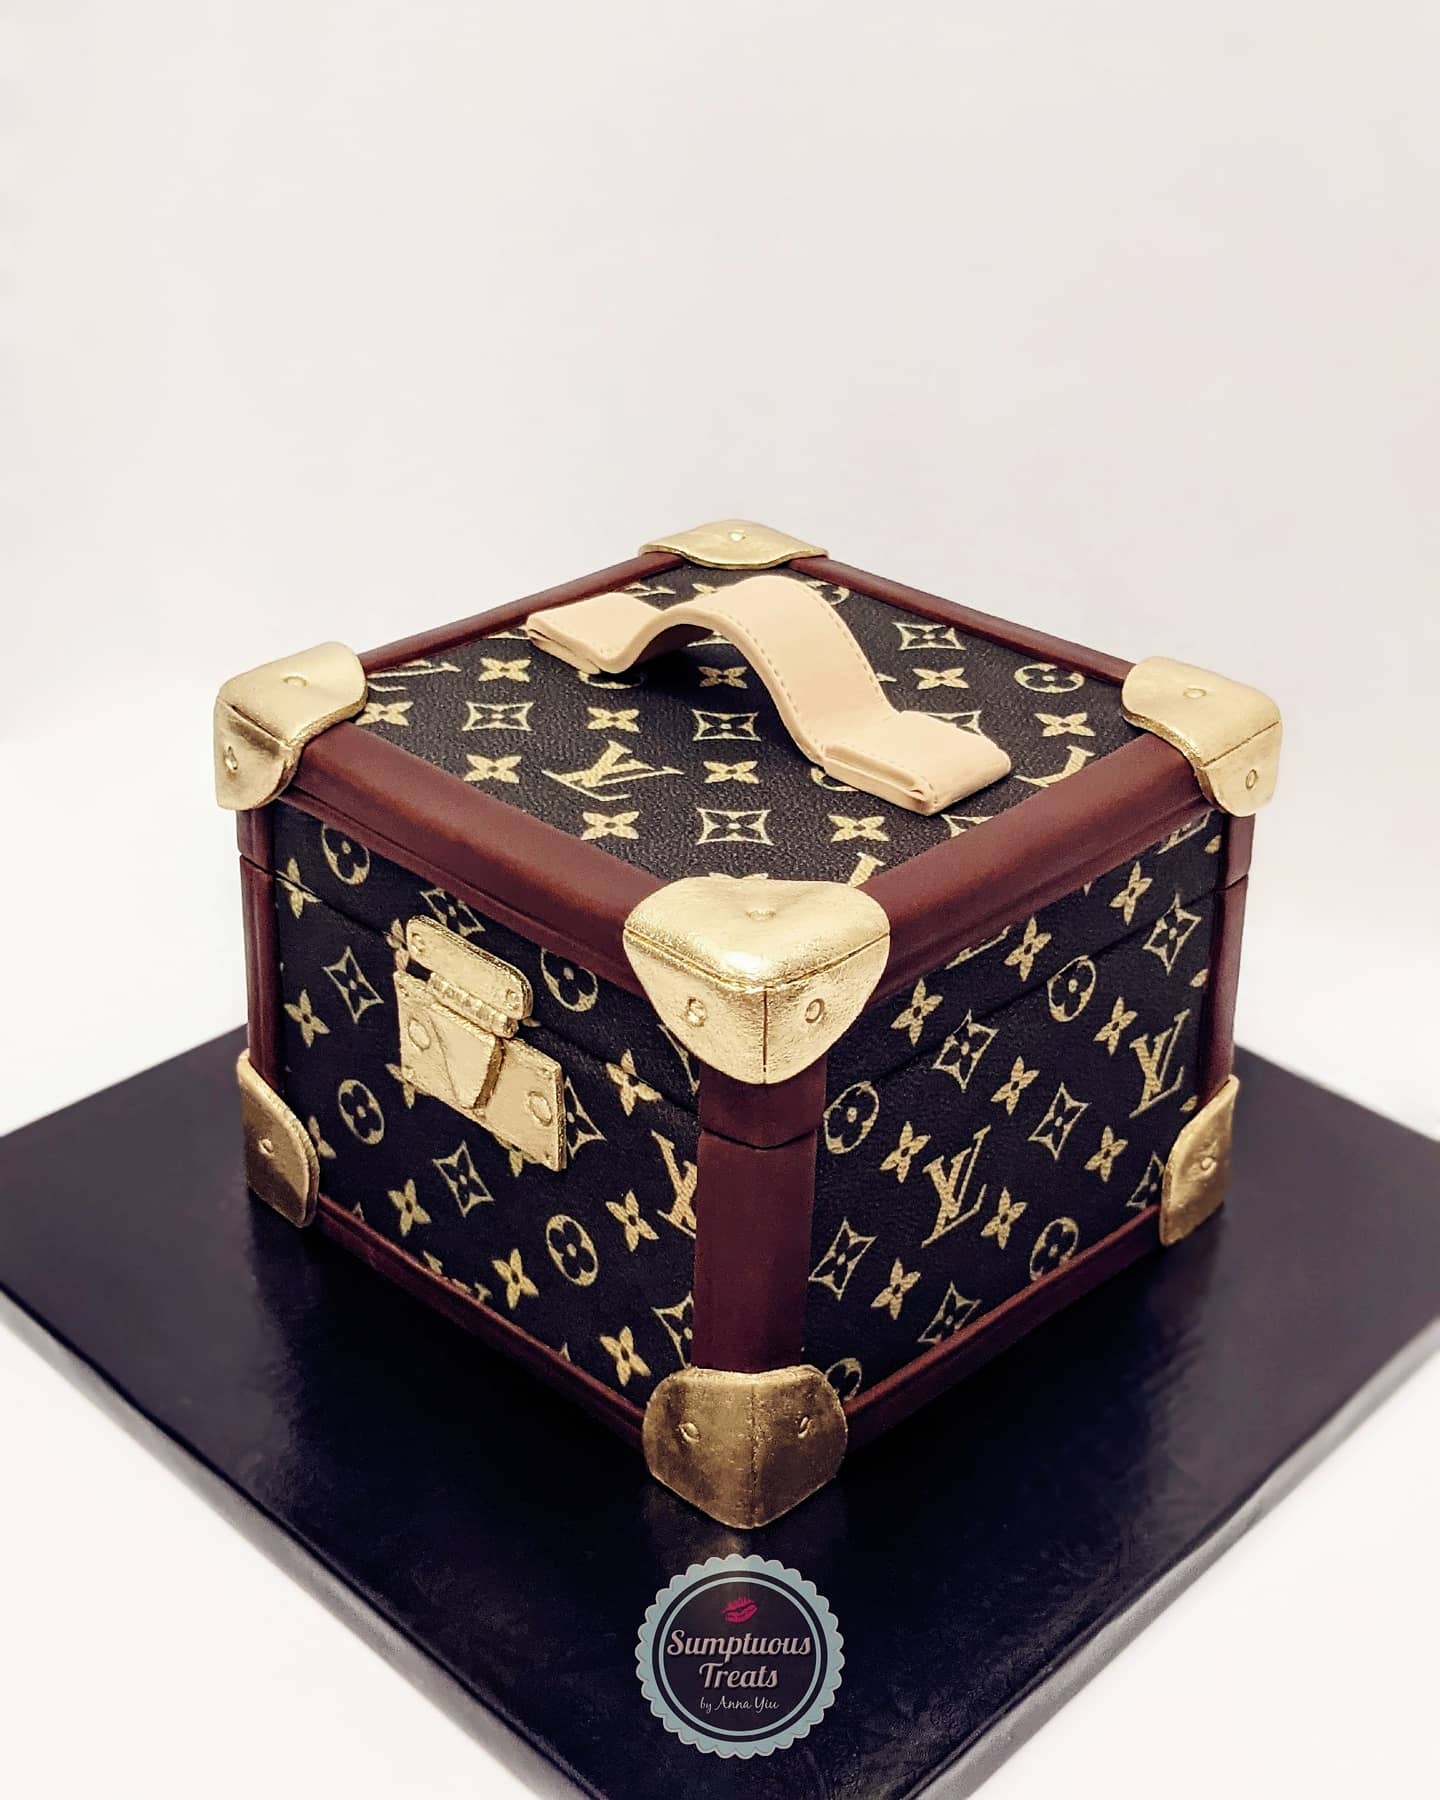 Sumptuous Treats on X: LV Gift Box Birthday Cake #lvcakes #lvthemedcake  #louisvuittonlover #louisvuitton #louisvuittoncake #cakefondant  #specialtycakes #torontocakes #customcakes #ilovelv #lvgold    / X